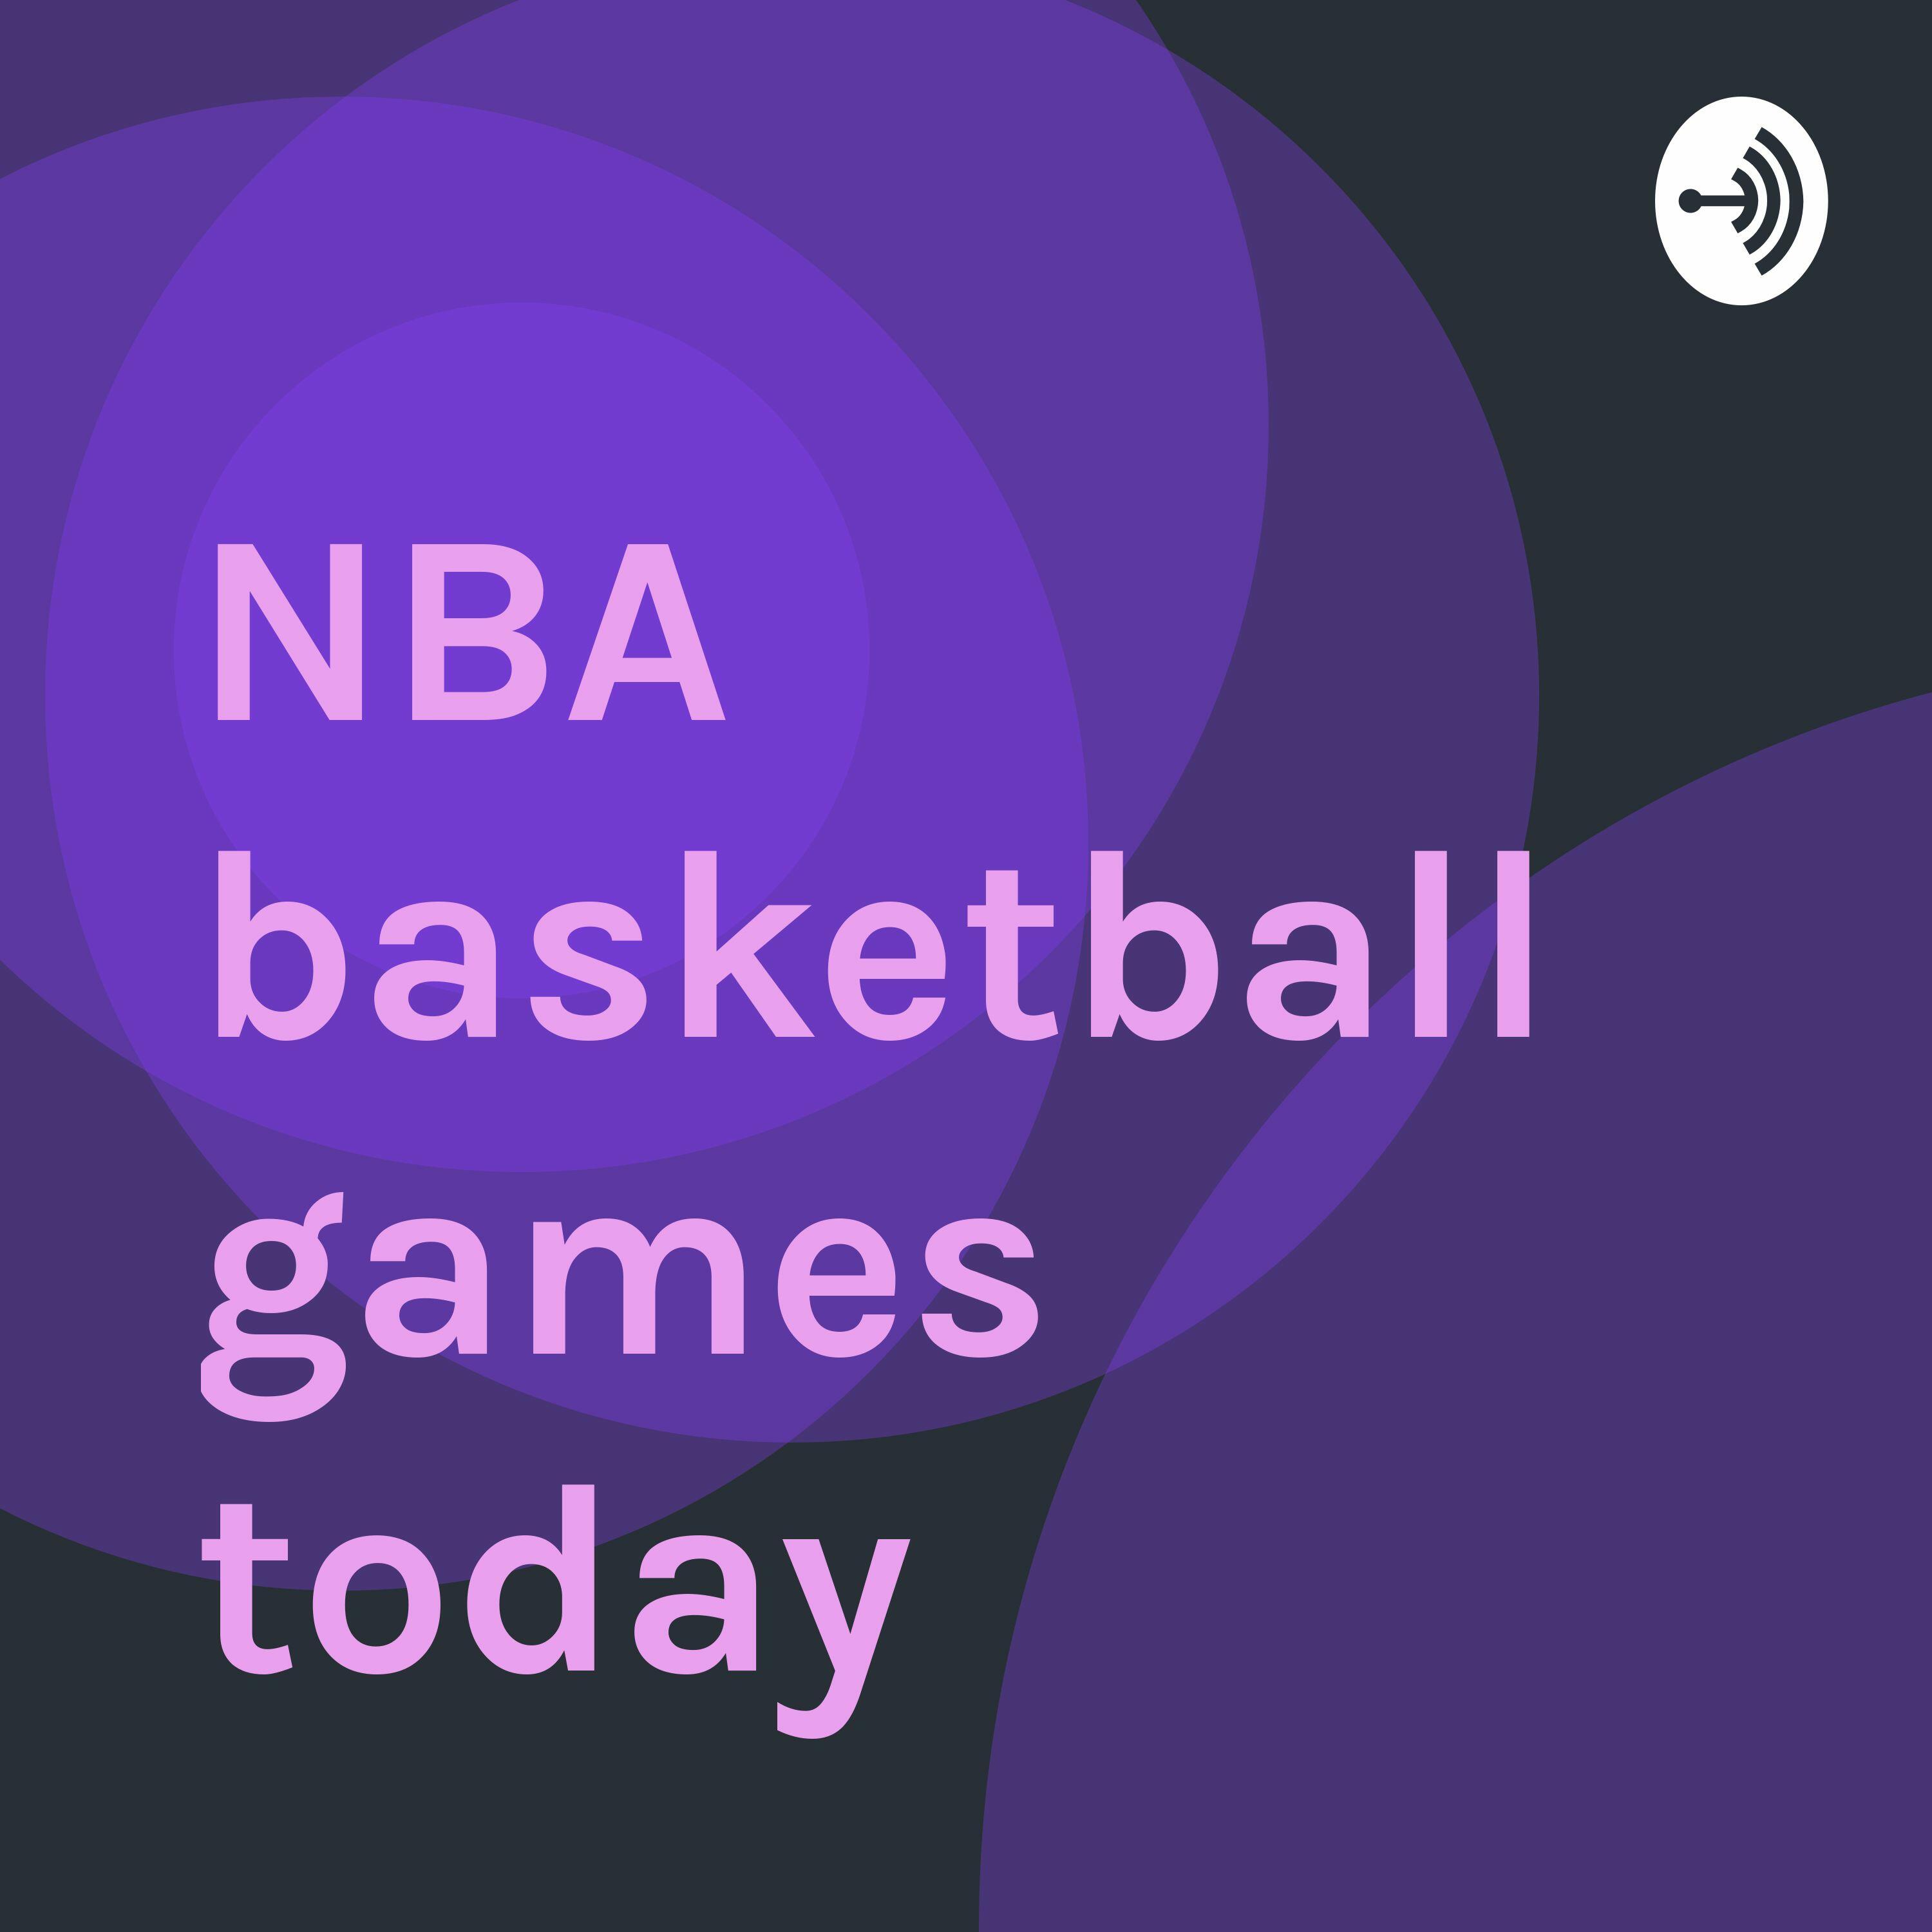 NBA basketball games today iHeart